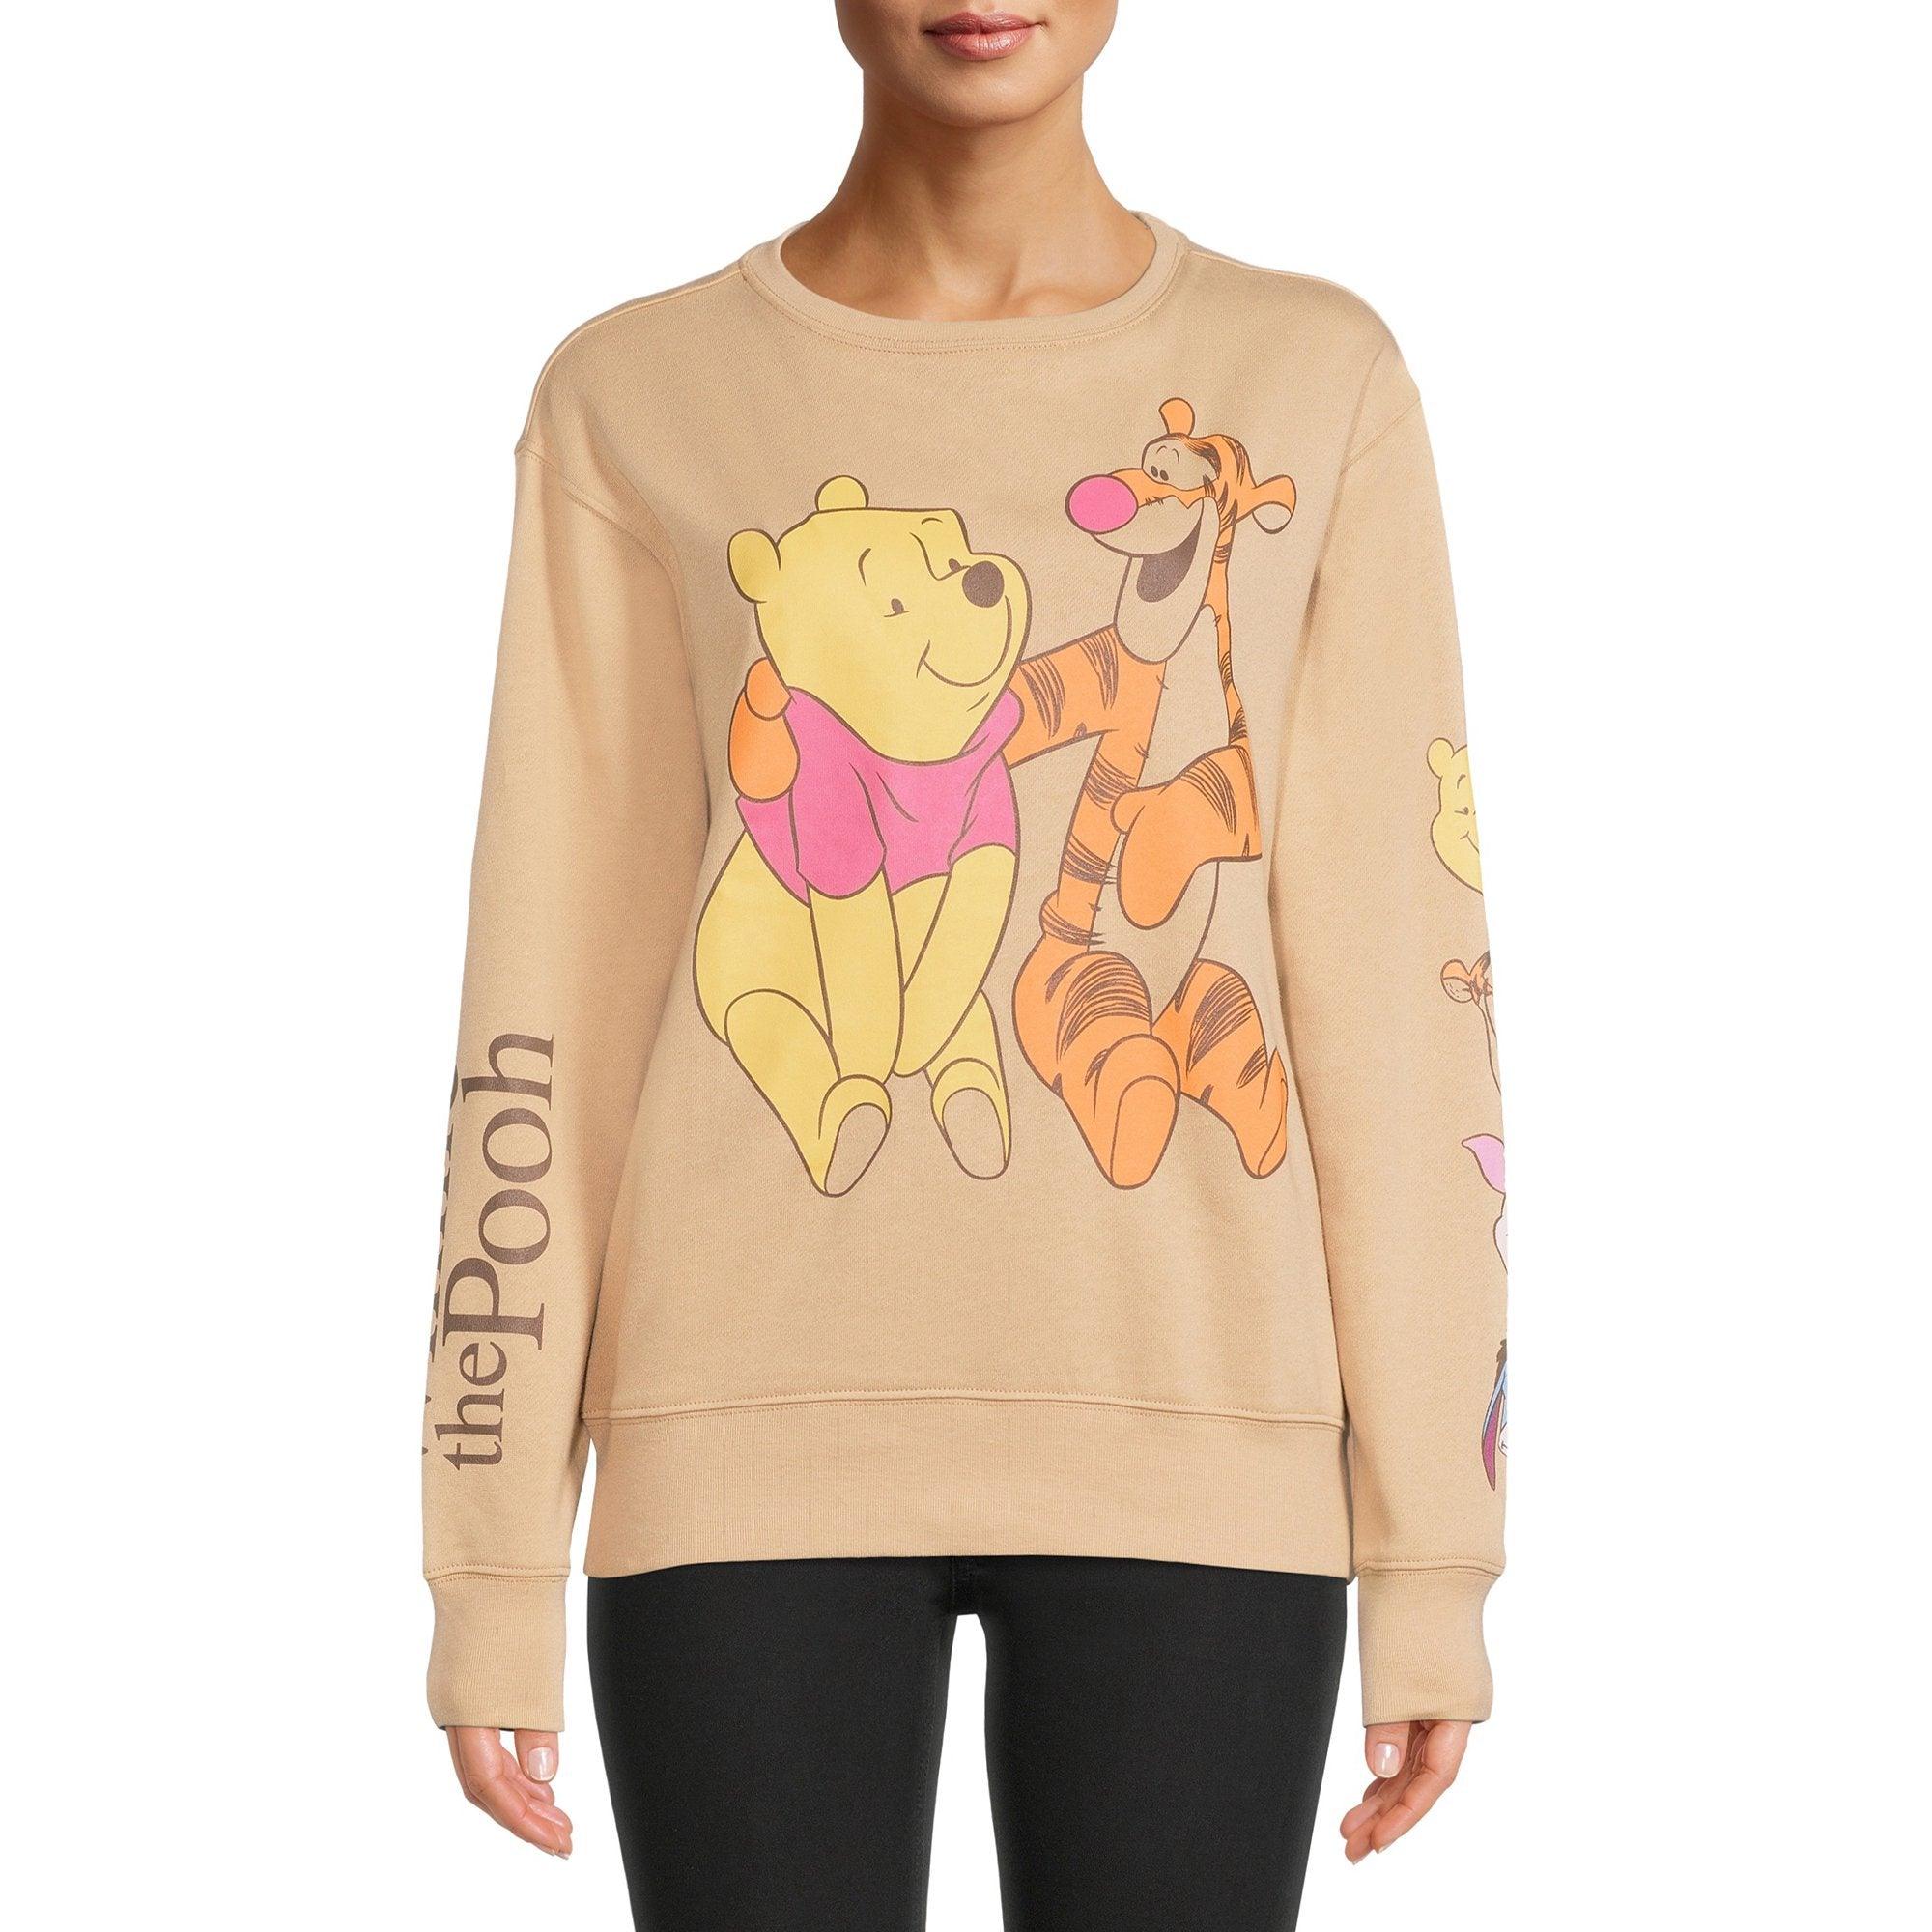 Winnie the Pooh Juniors’ Pullover Sweatshirt